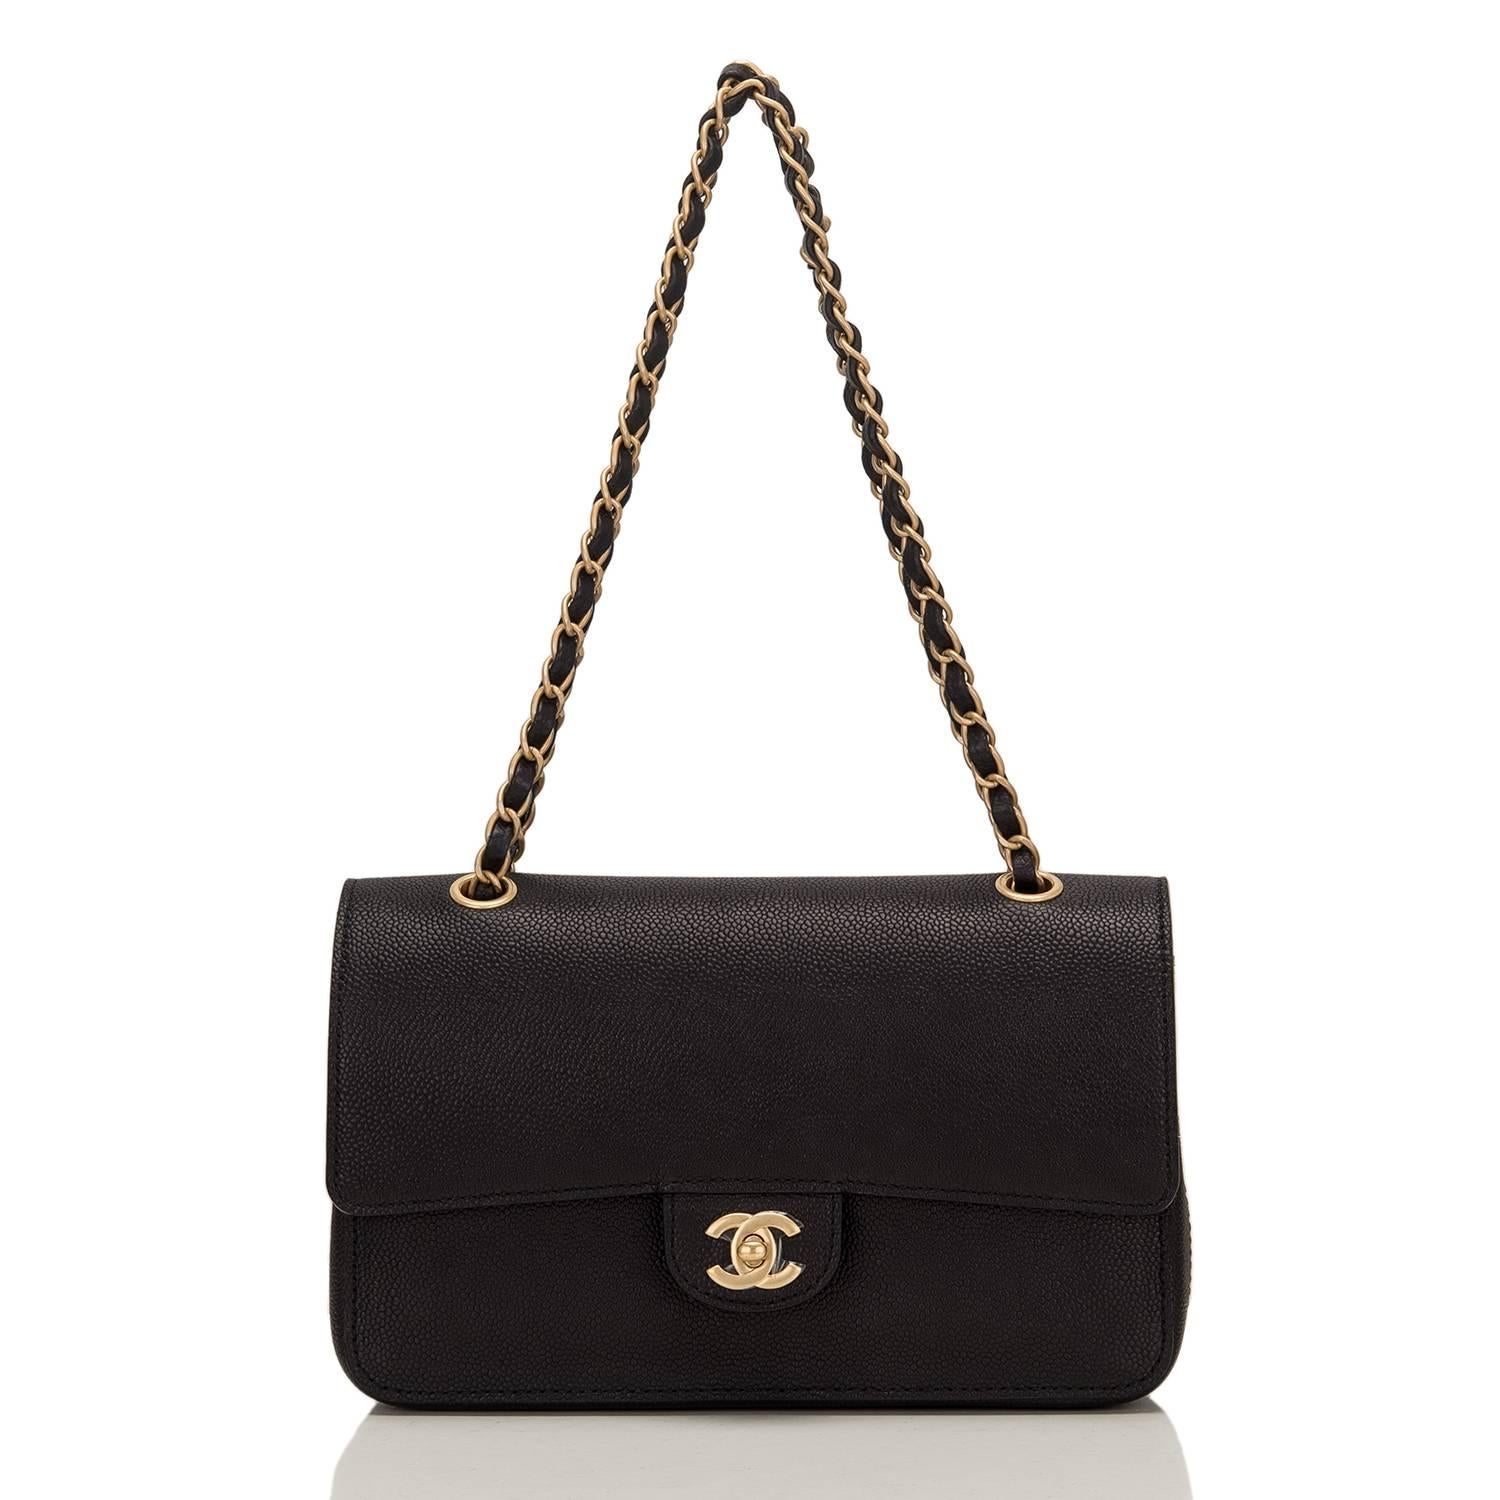 Chanel Black Caviar Medium Classic Double Flap Bag NEW For Sale 2